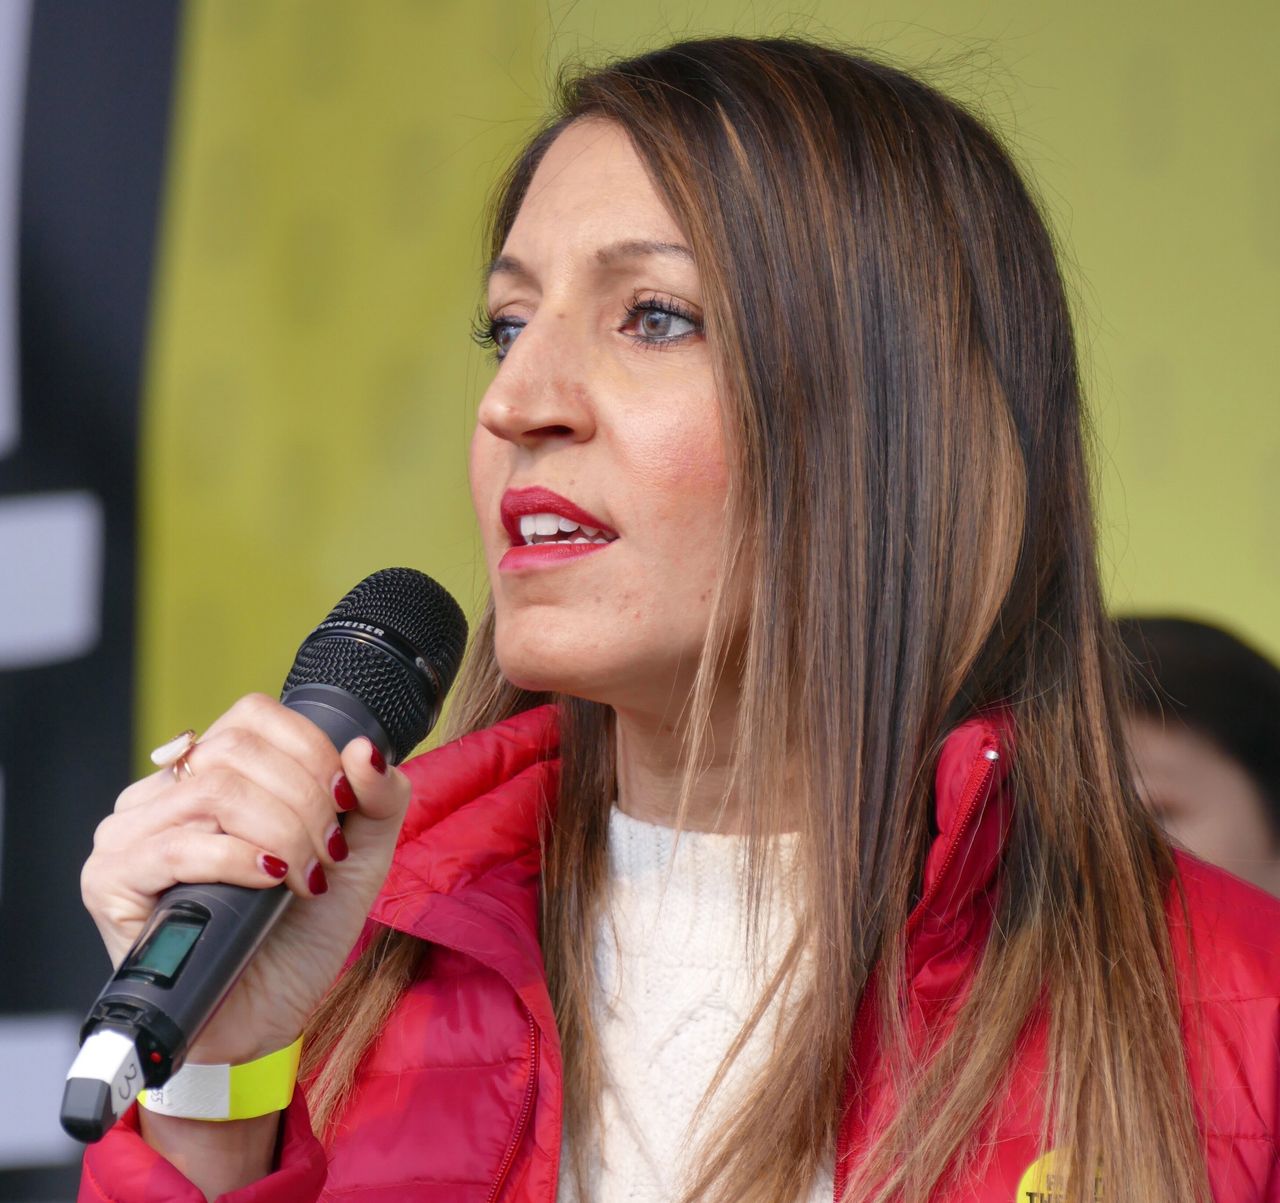 Rosena Allin-Khan; British; Labour Party, 